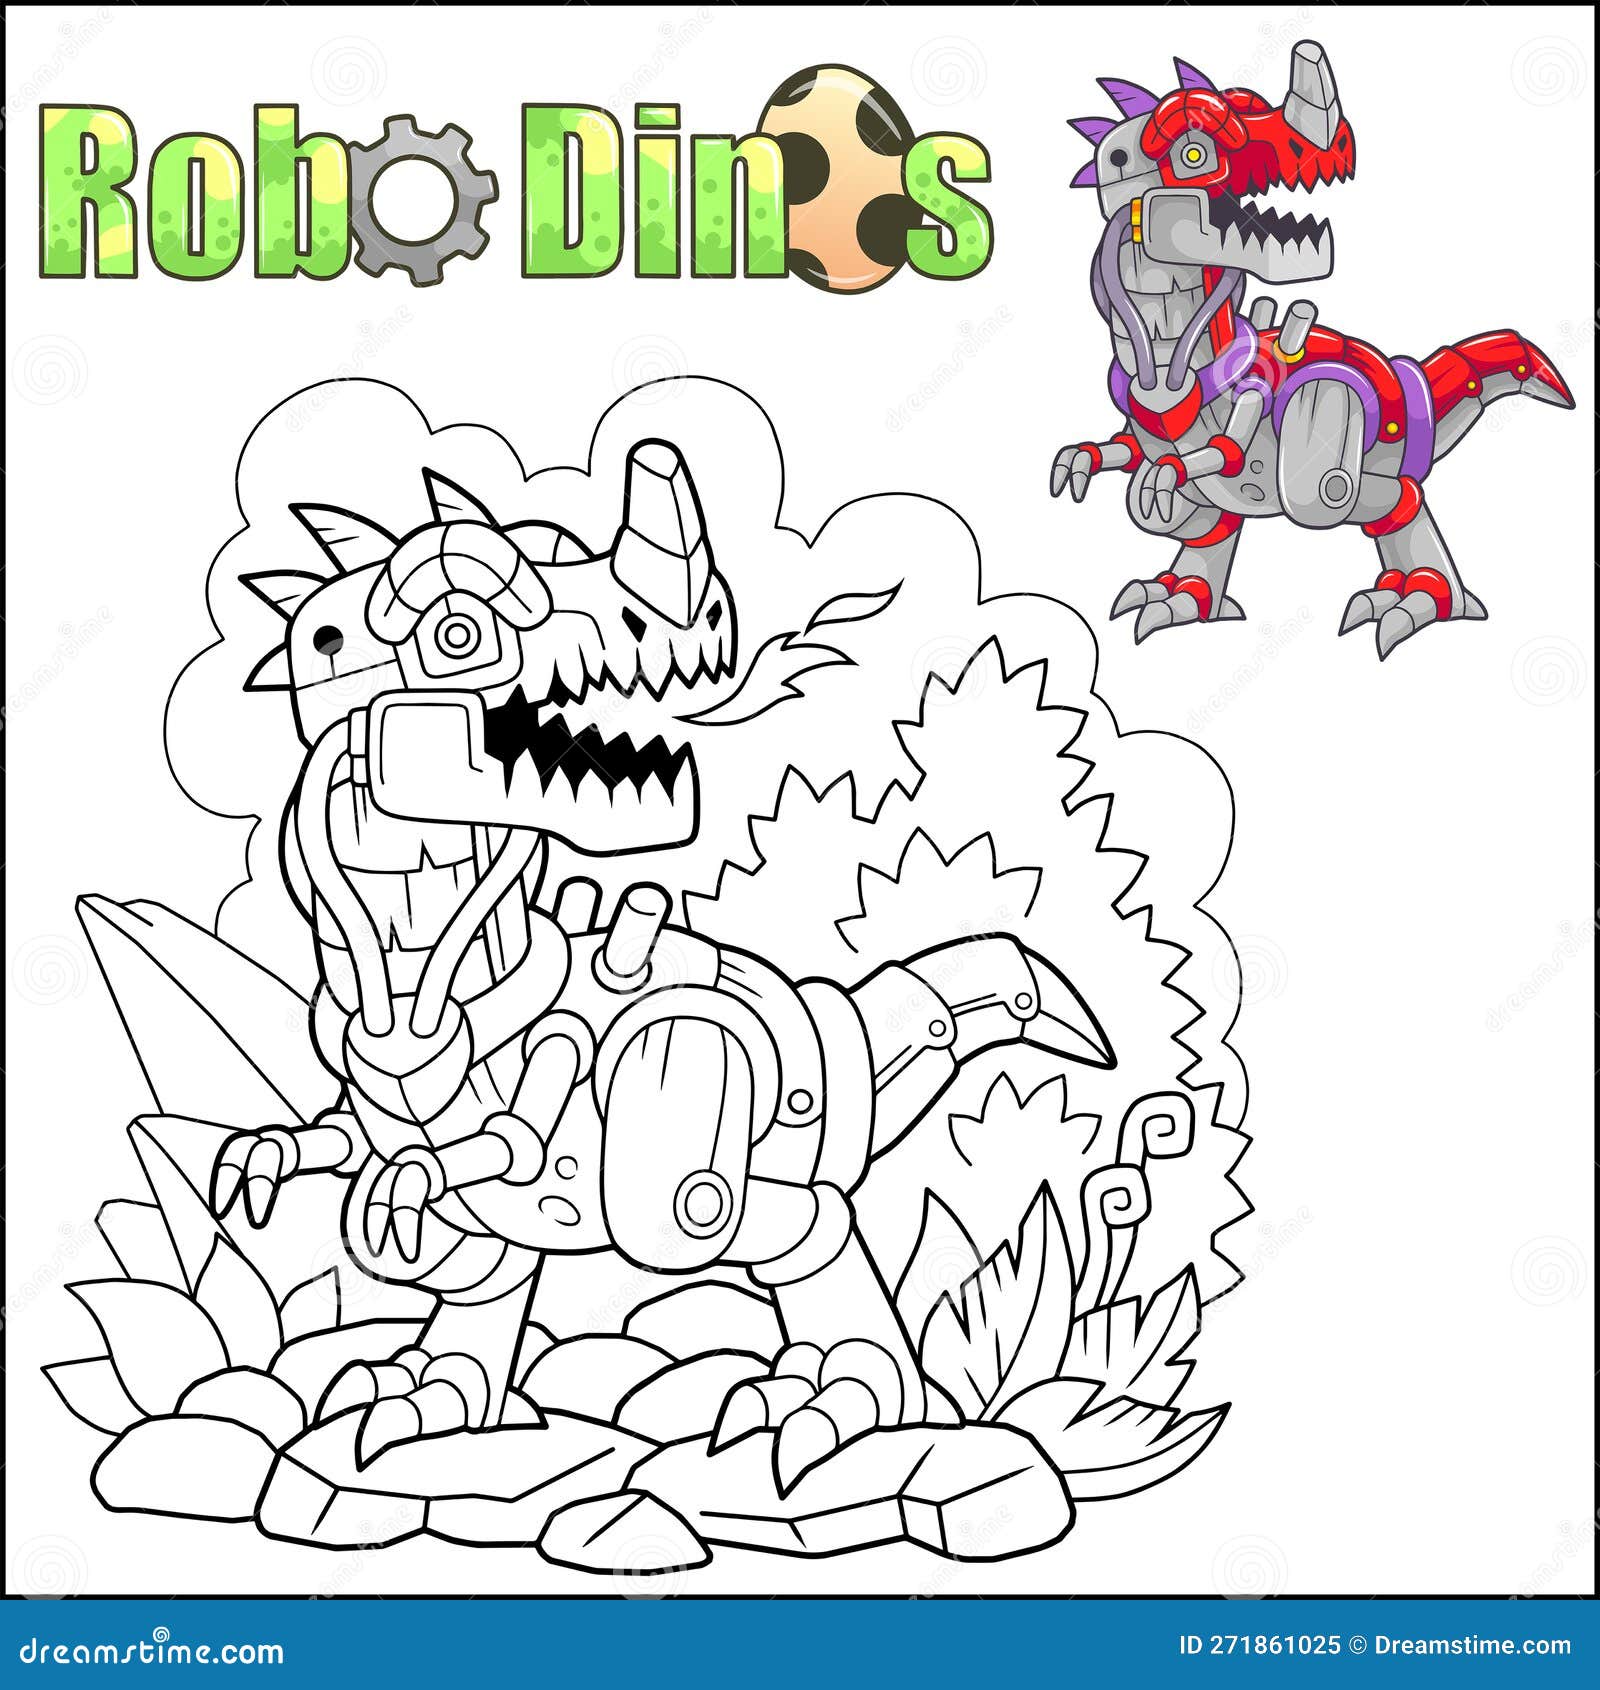 Cartoon robot dinosaur stock vector illustration of graphic